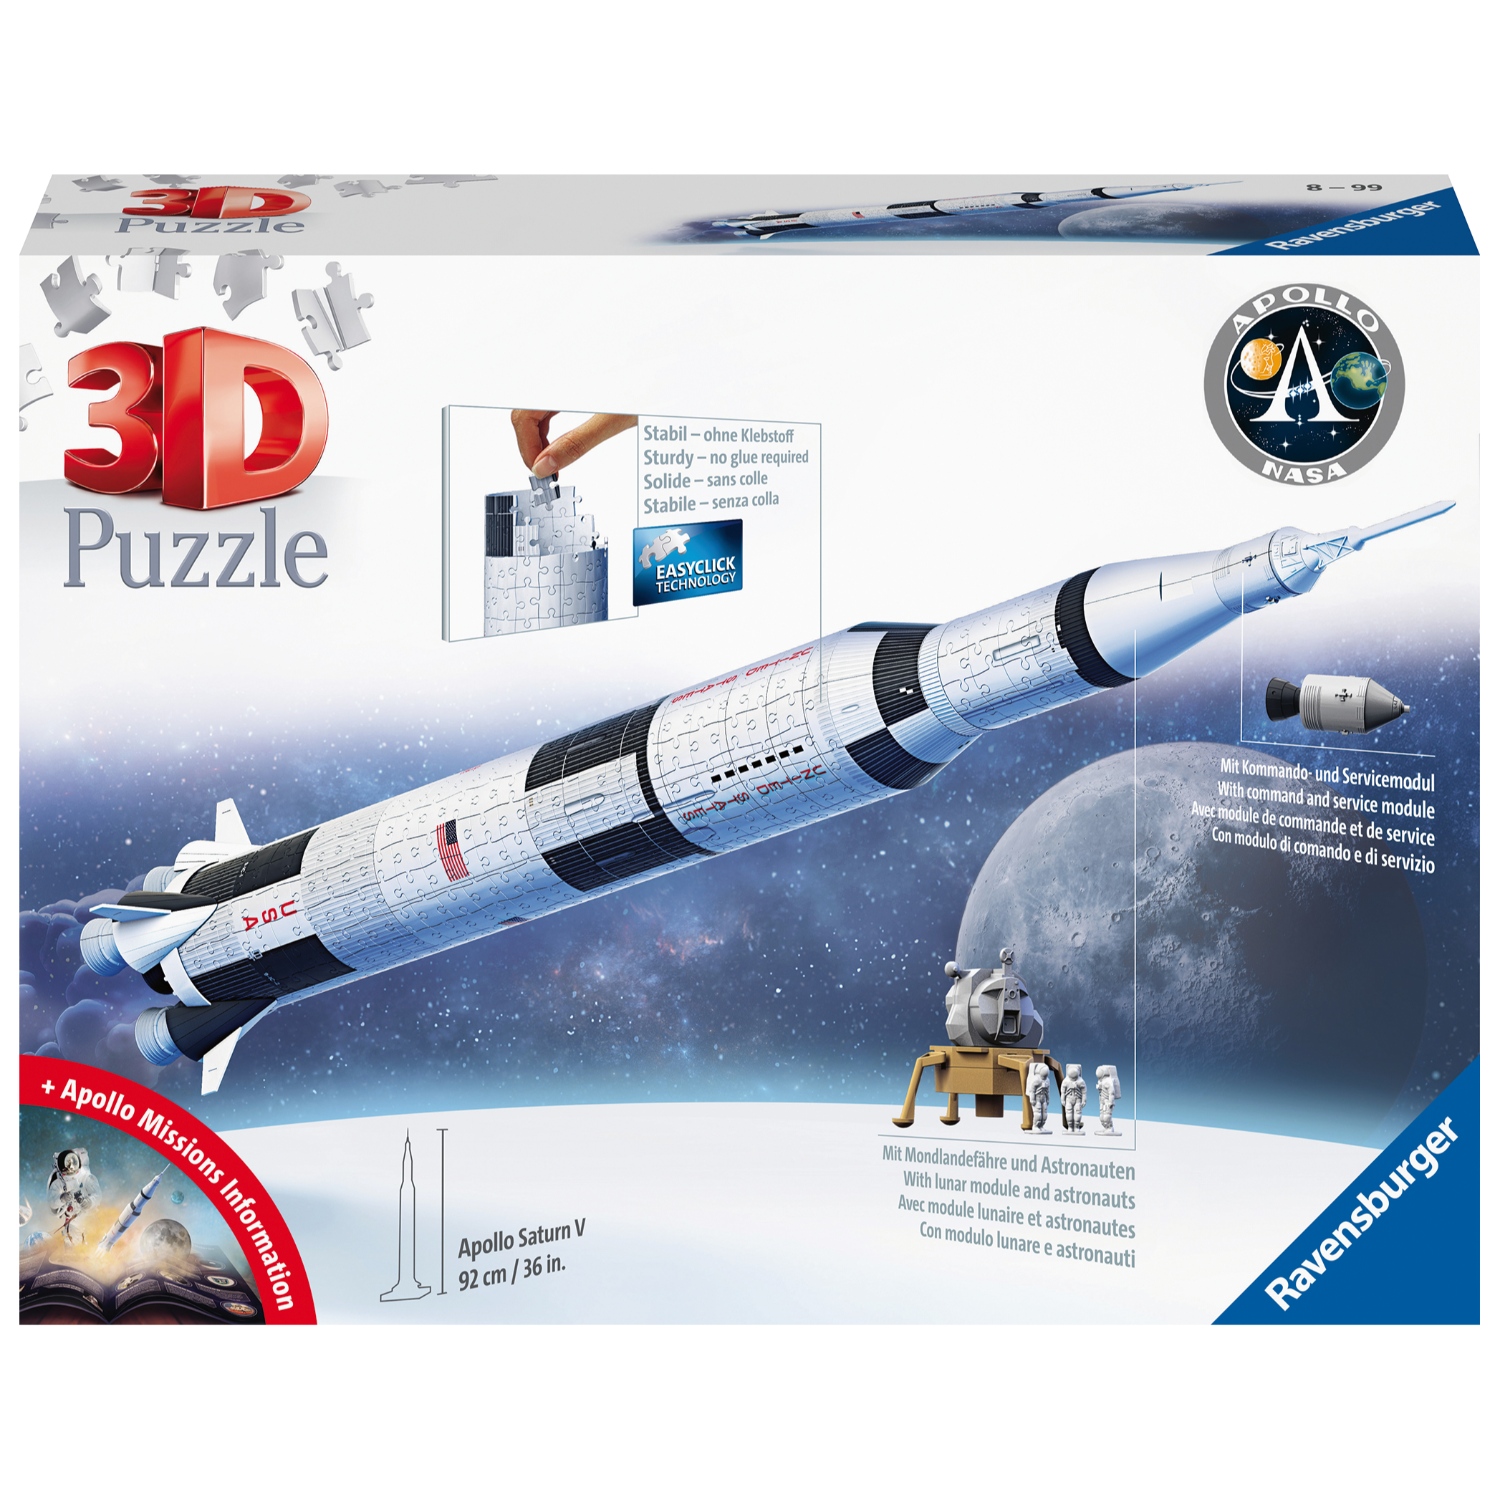 Top1Toys Ravensburger puzzel 3D Apollo Saturn V raket